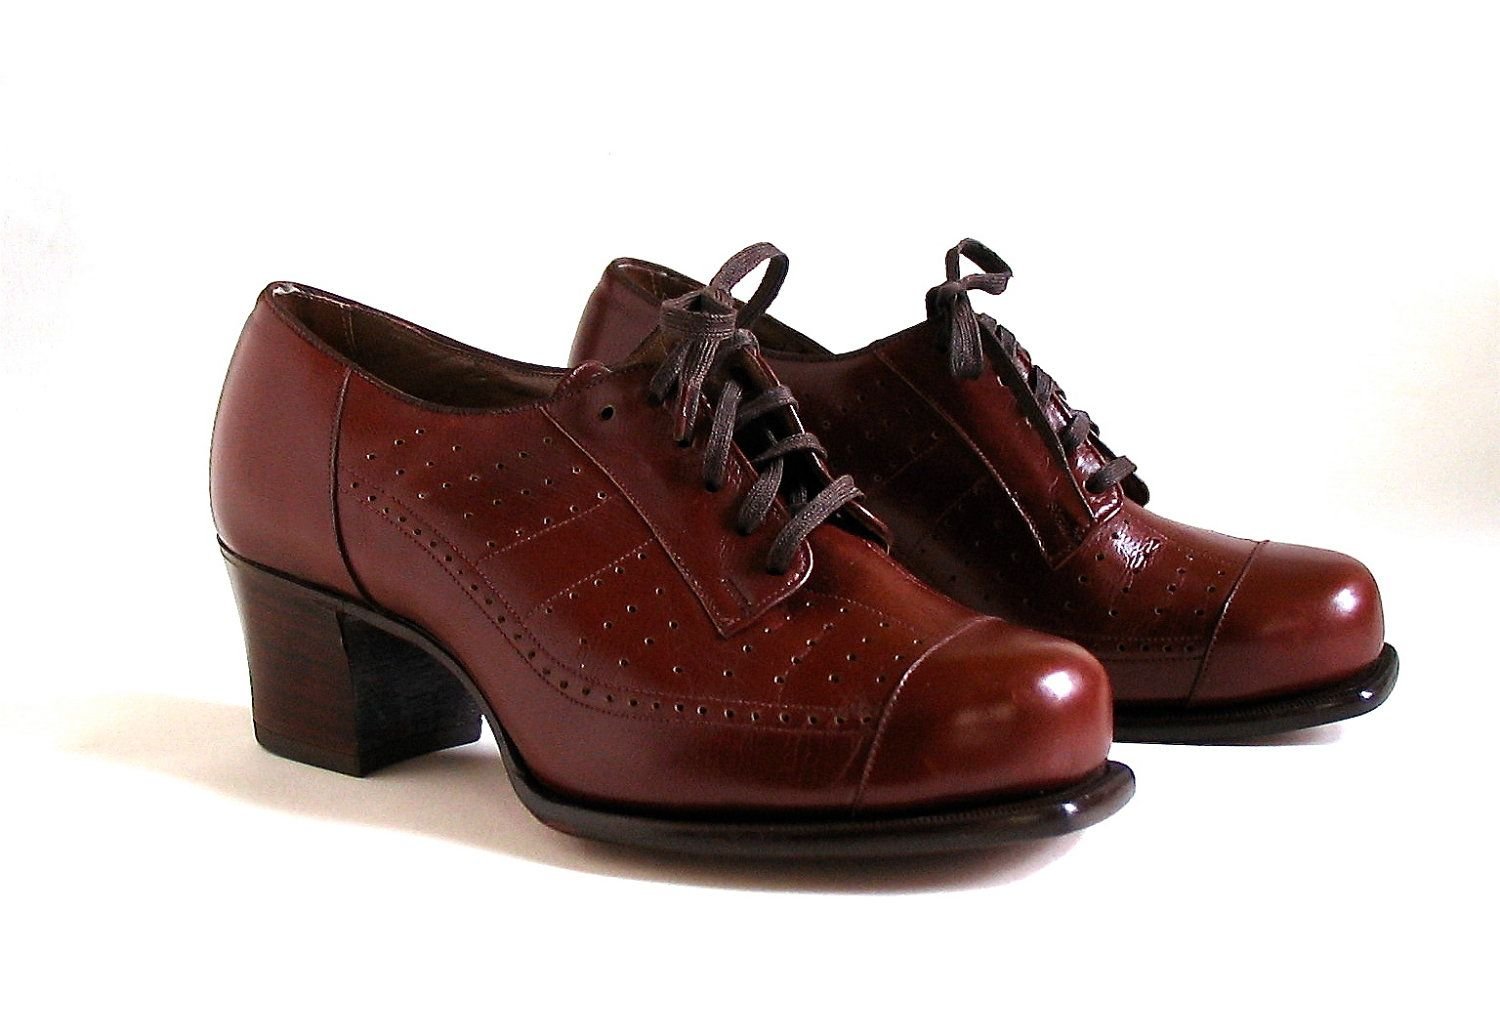 Оксфорд шуз женская обувь. Обувь оксфорды 1940. Английская женская обувь. Винтажные туфли женские. Туфли на английском языке